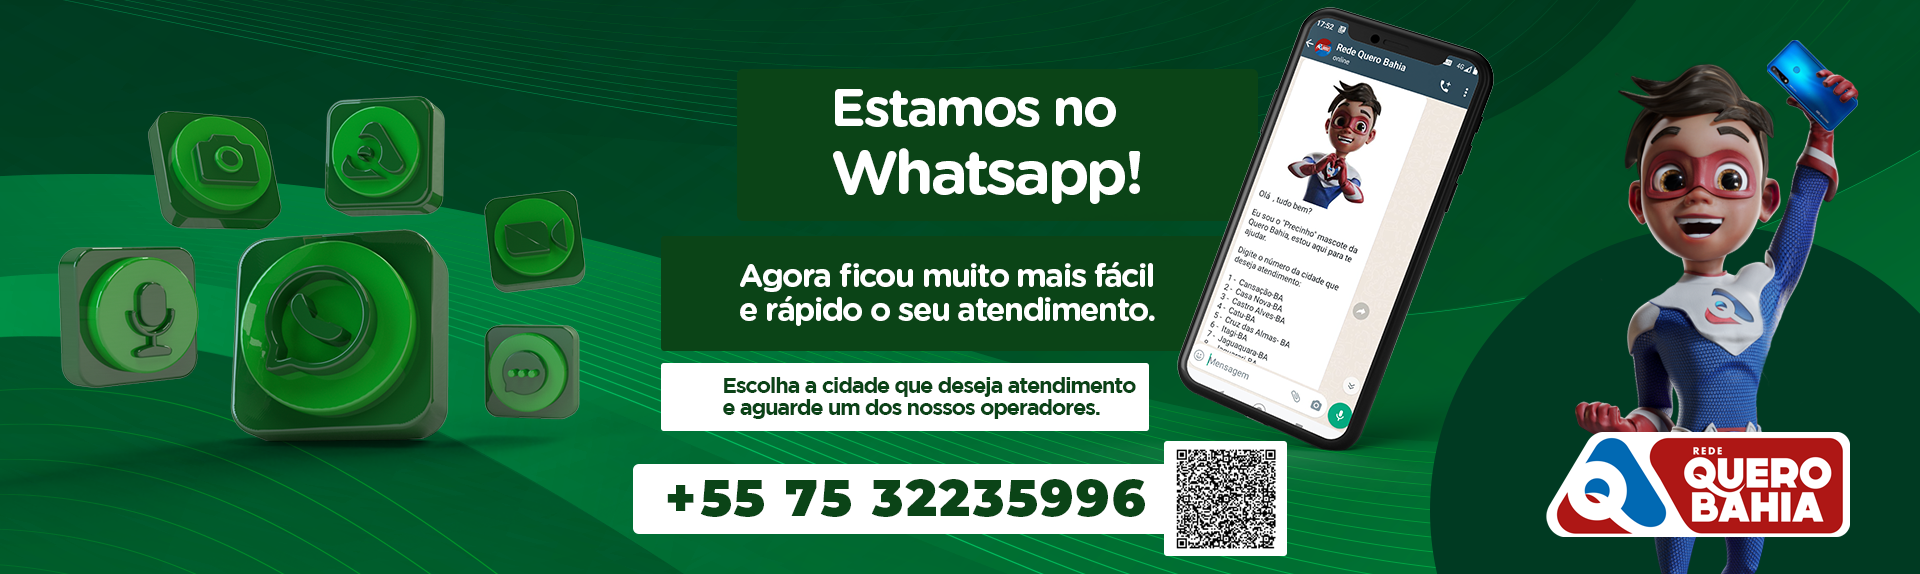 Whatsapp Rede Quero Bahia